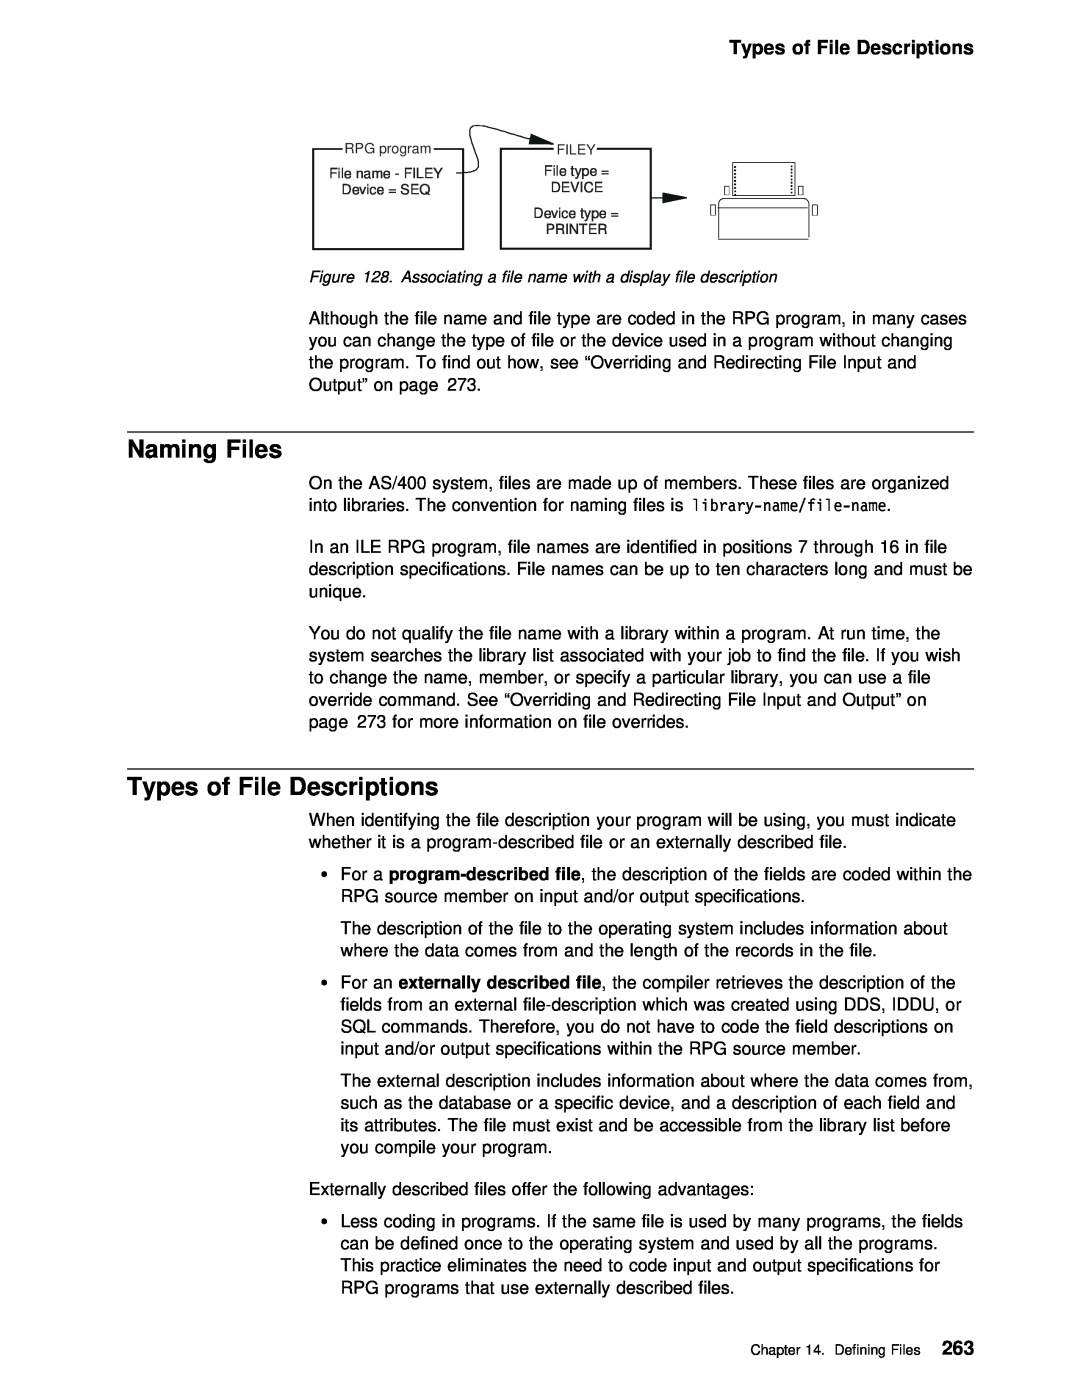 IBM AS/400 manual Naming Files, Types of File Descriptions 